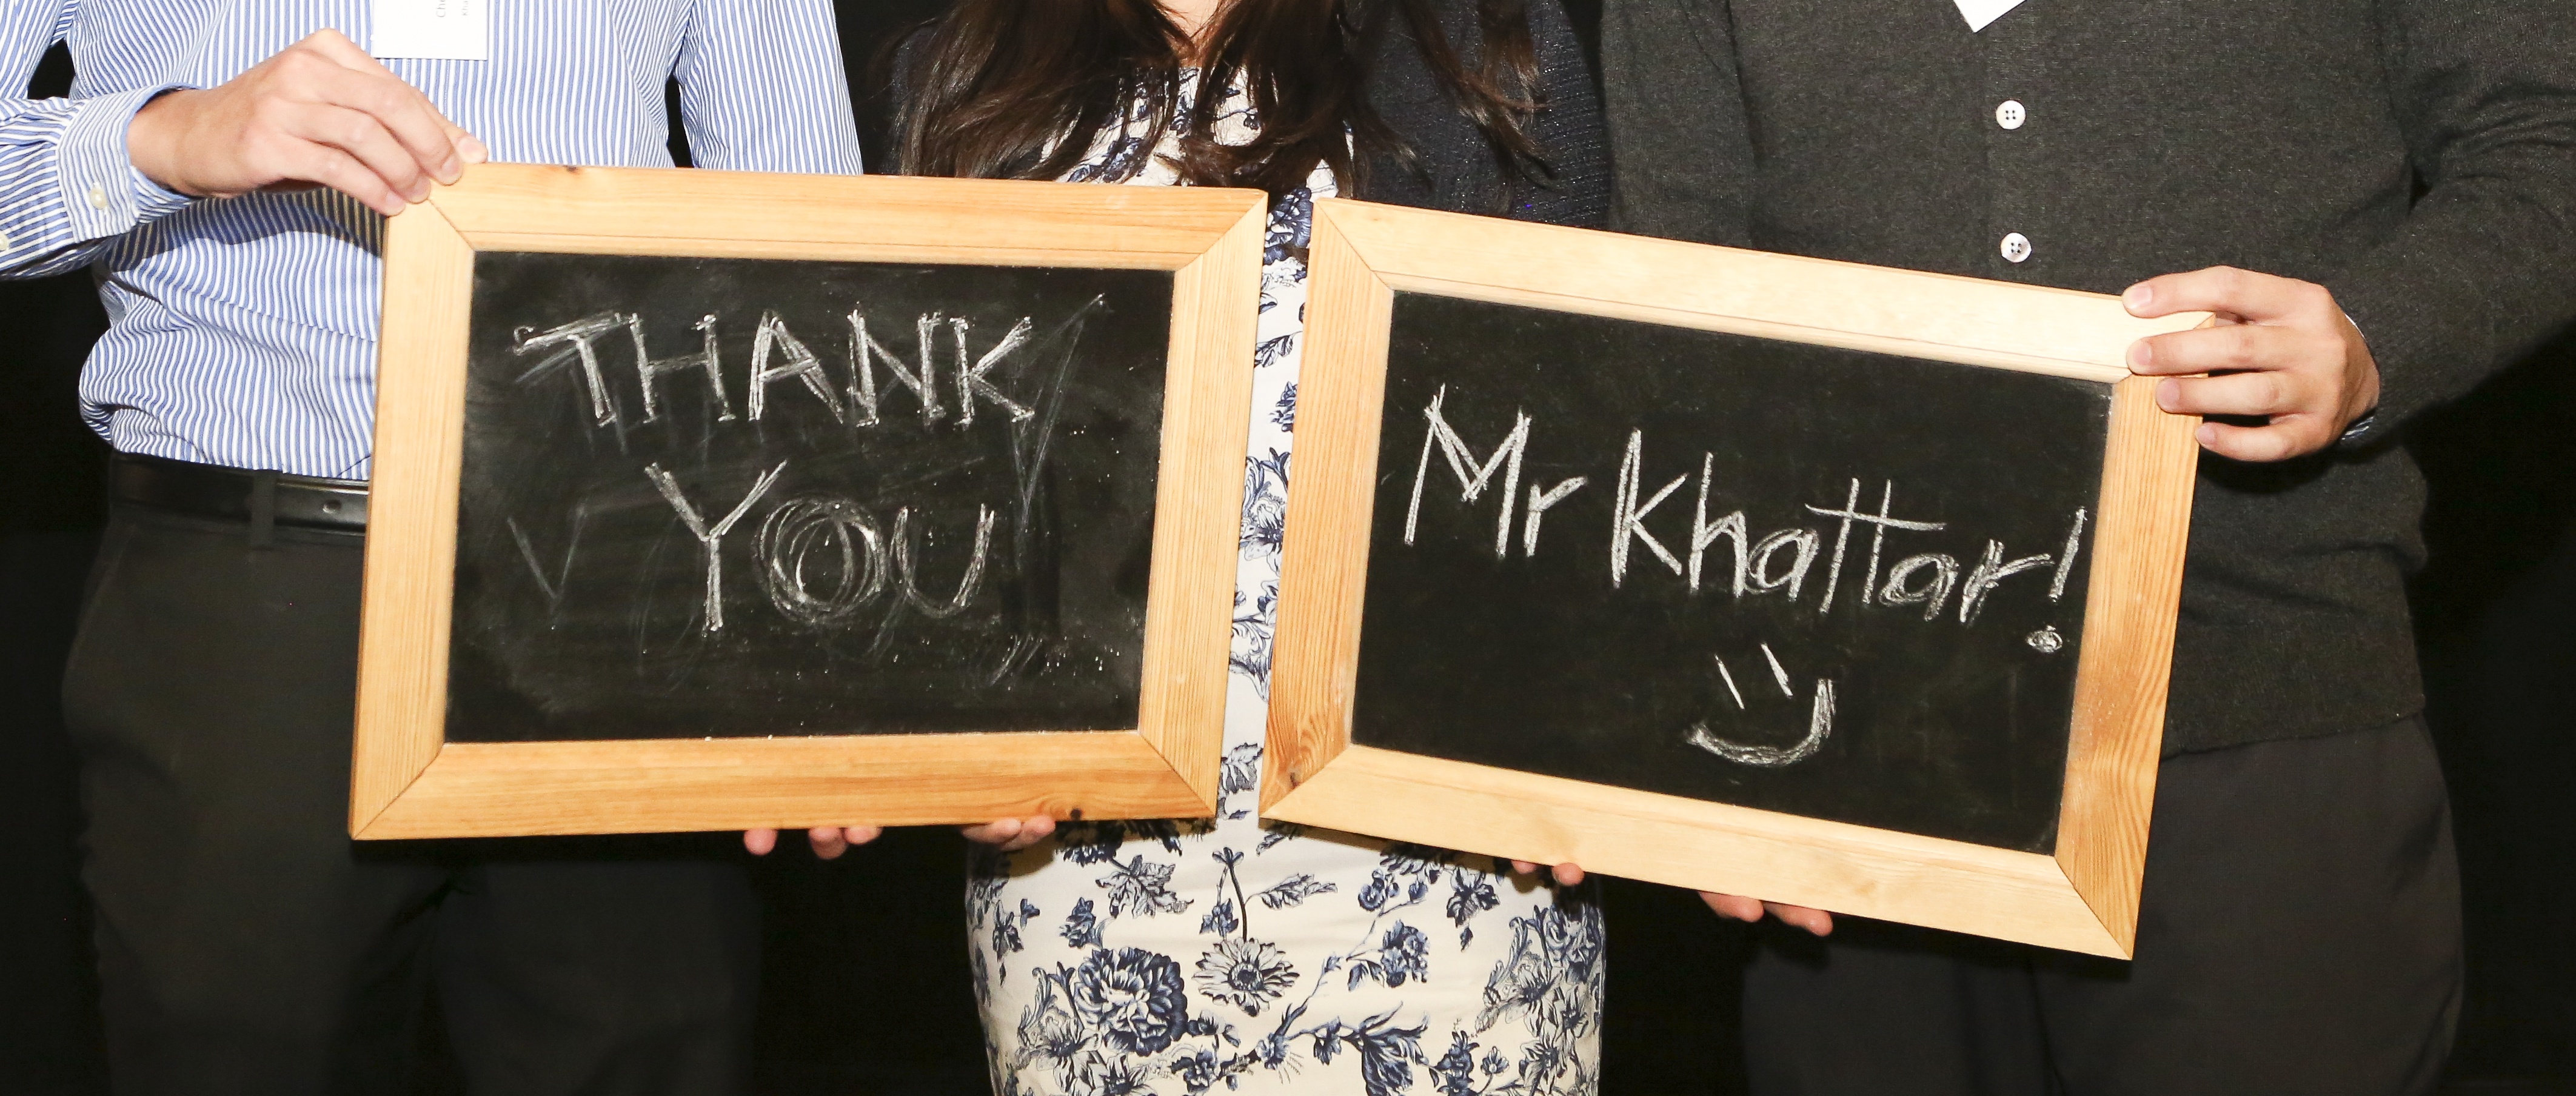 Scholars holding chalk boards thanking Mr Khattar